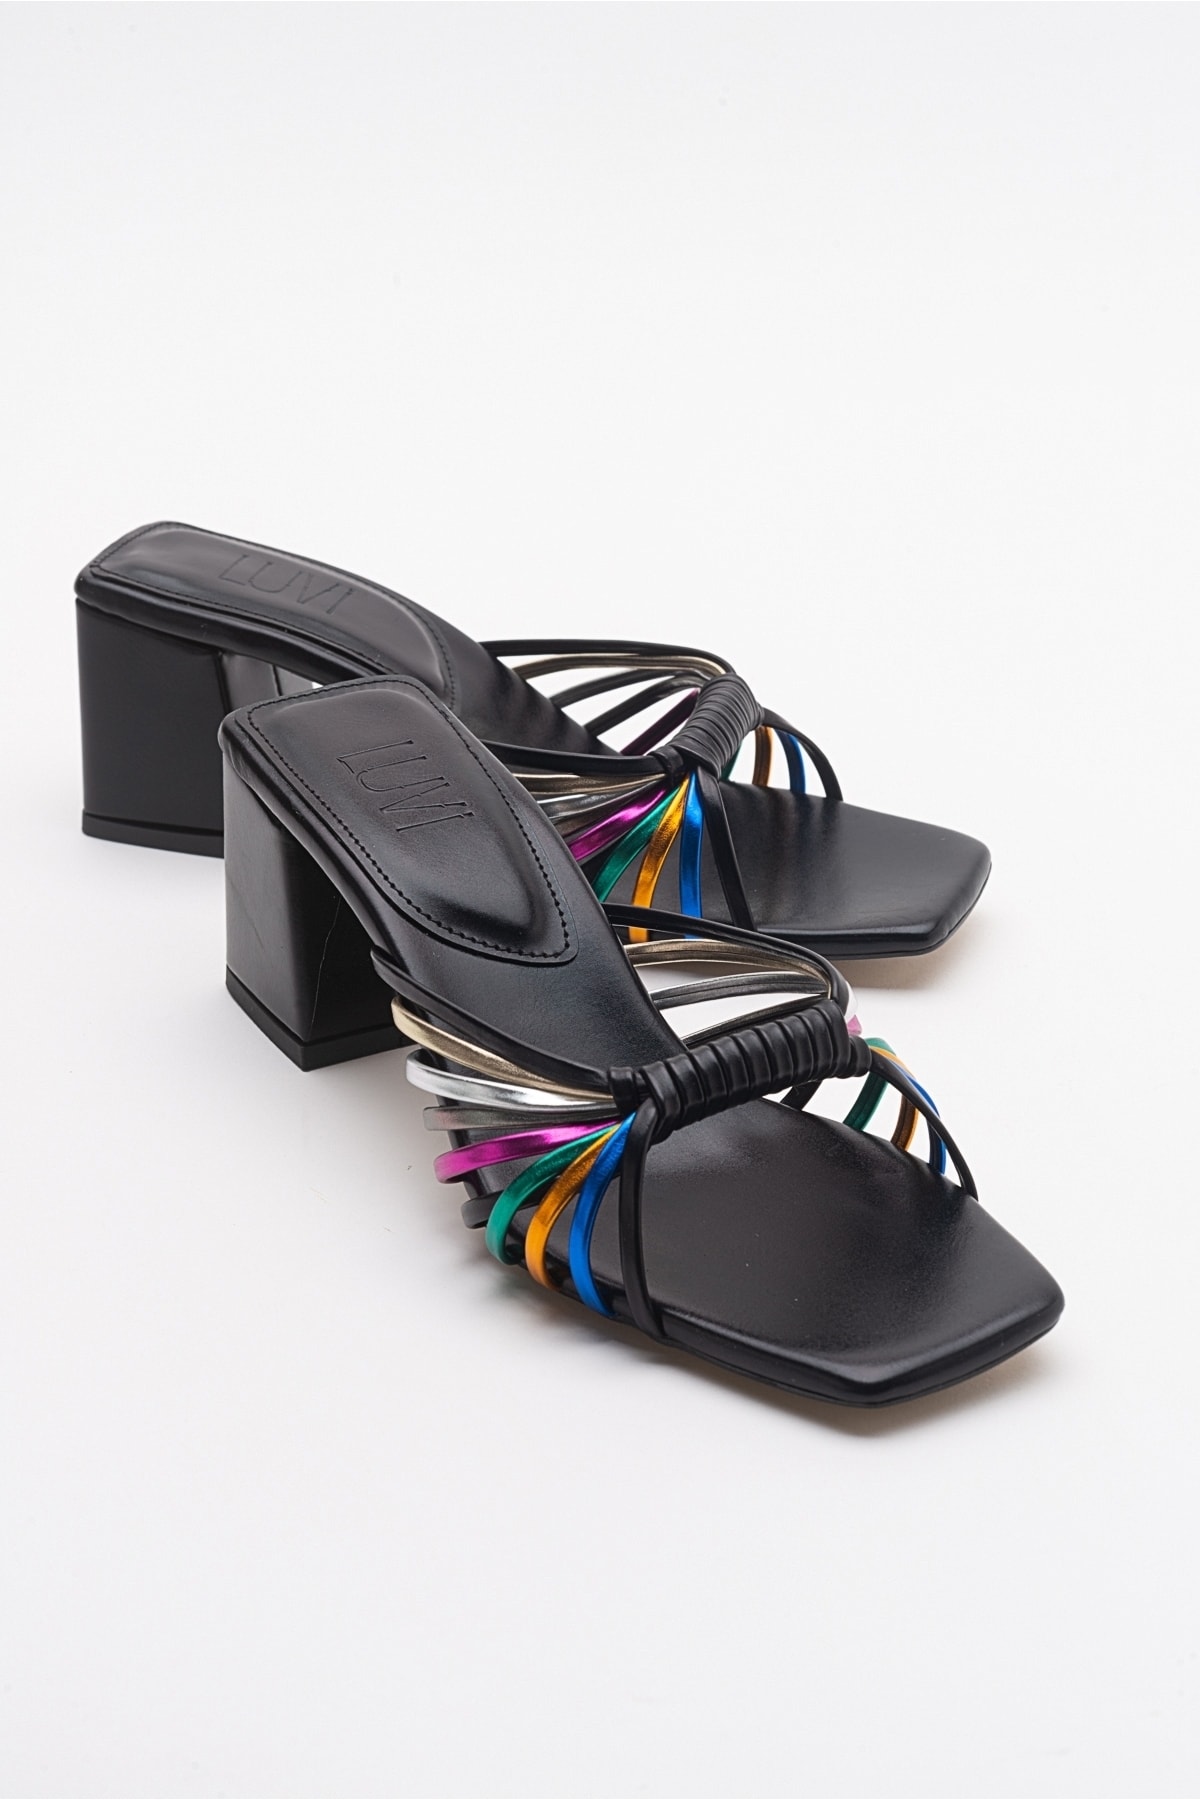 LuviShoes Roum Siyah Multi Metalik Kadın Topuklu Terlik